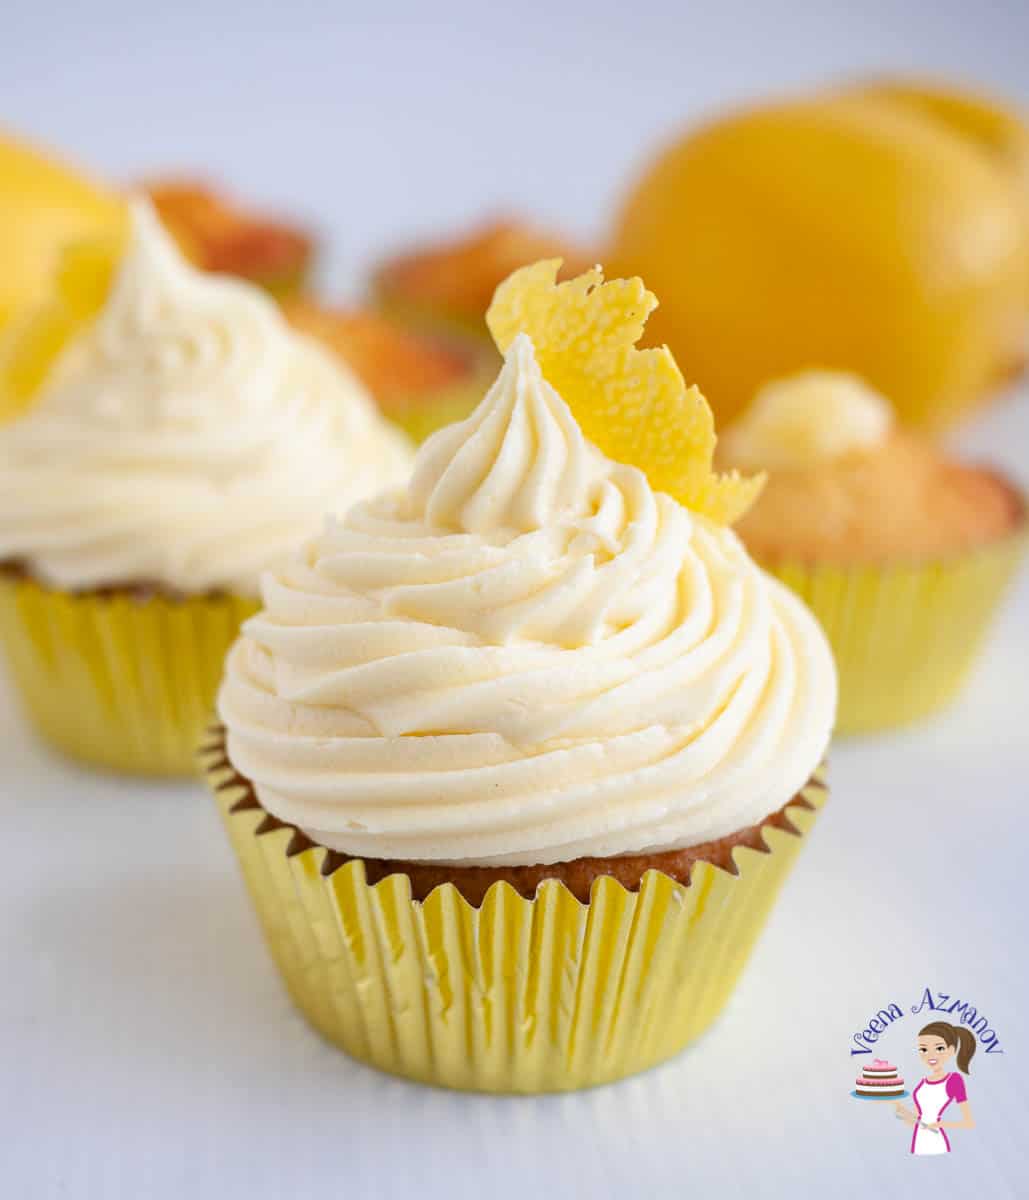 A cupcake with lemon buttercream.